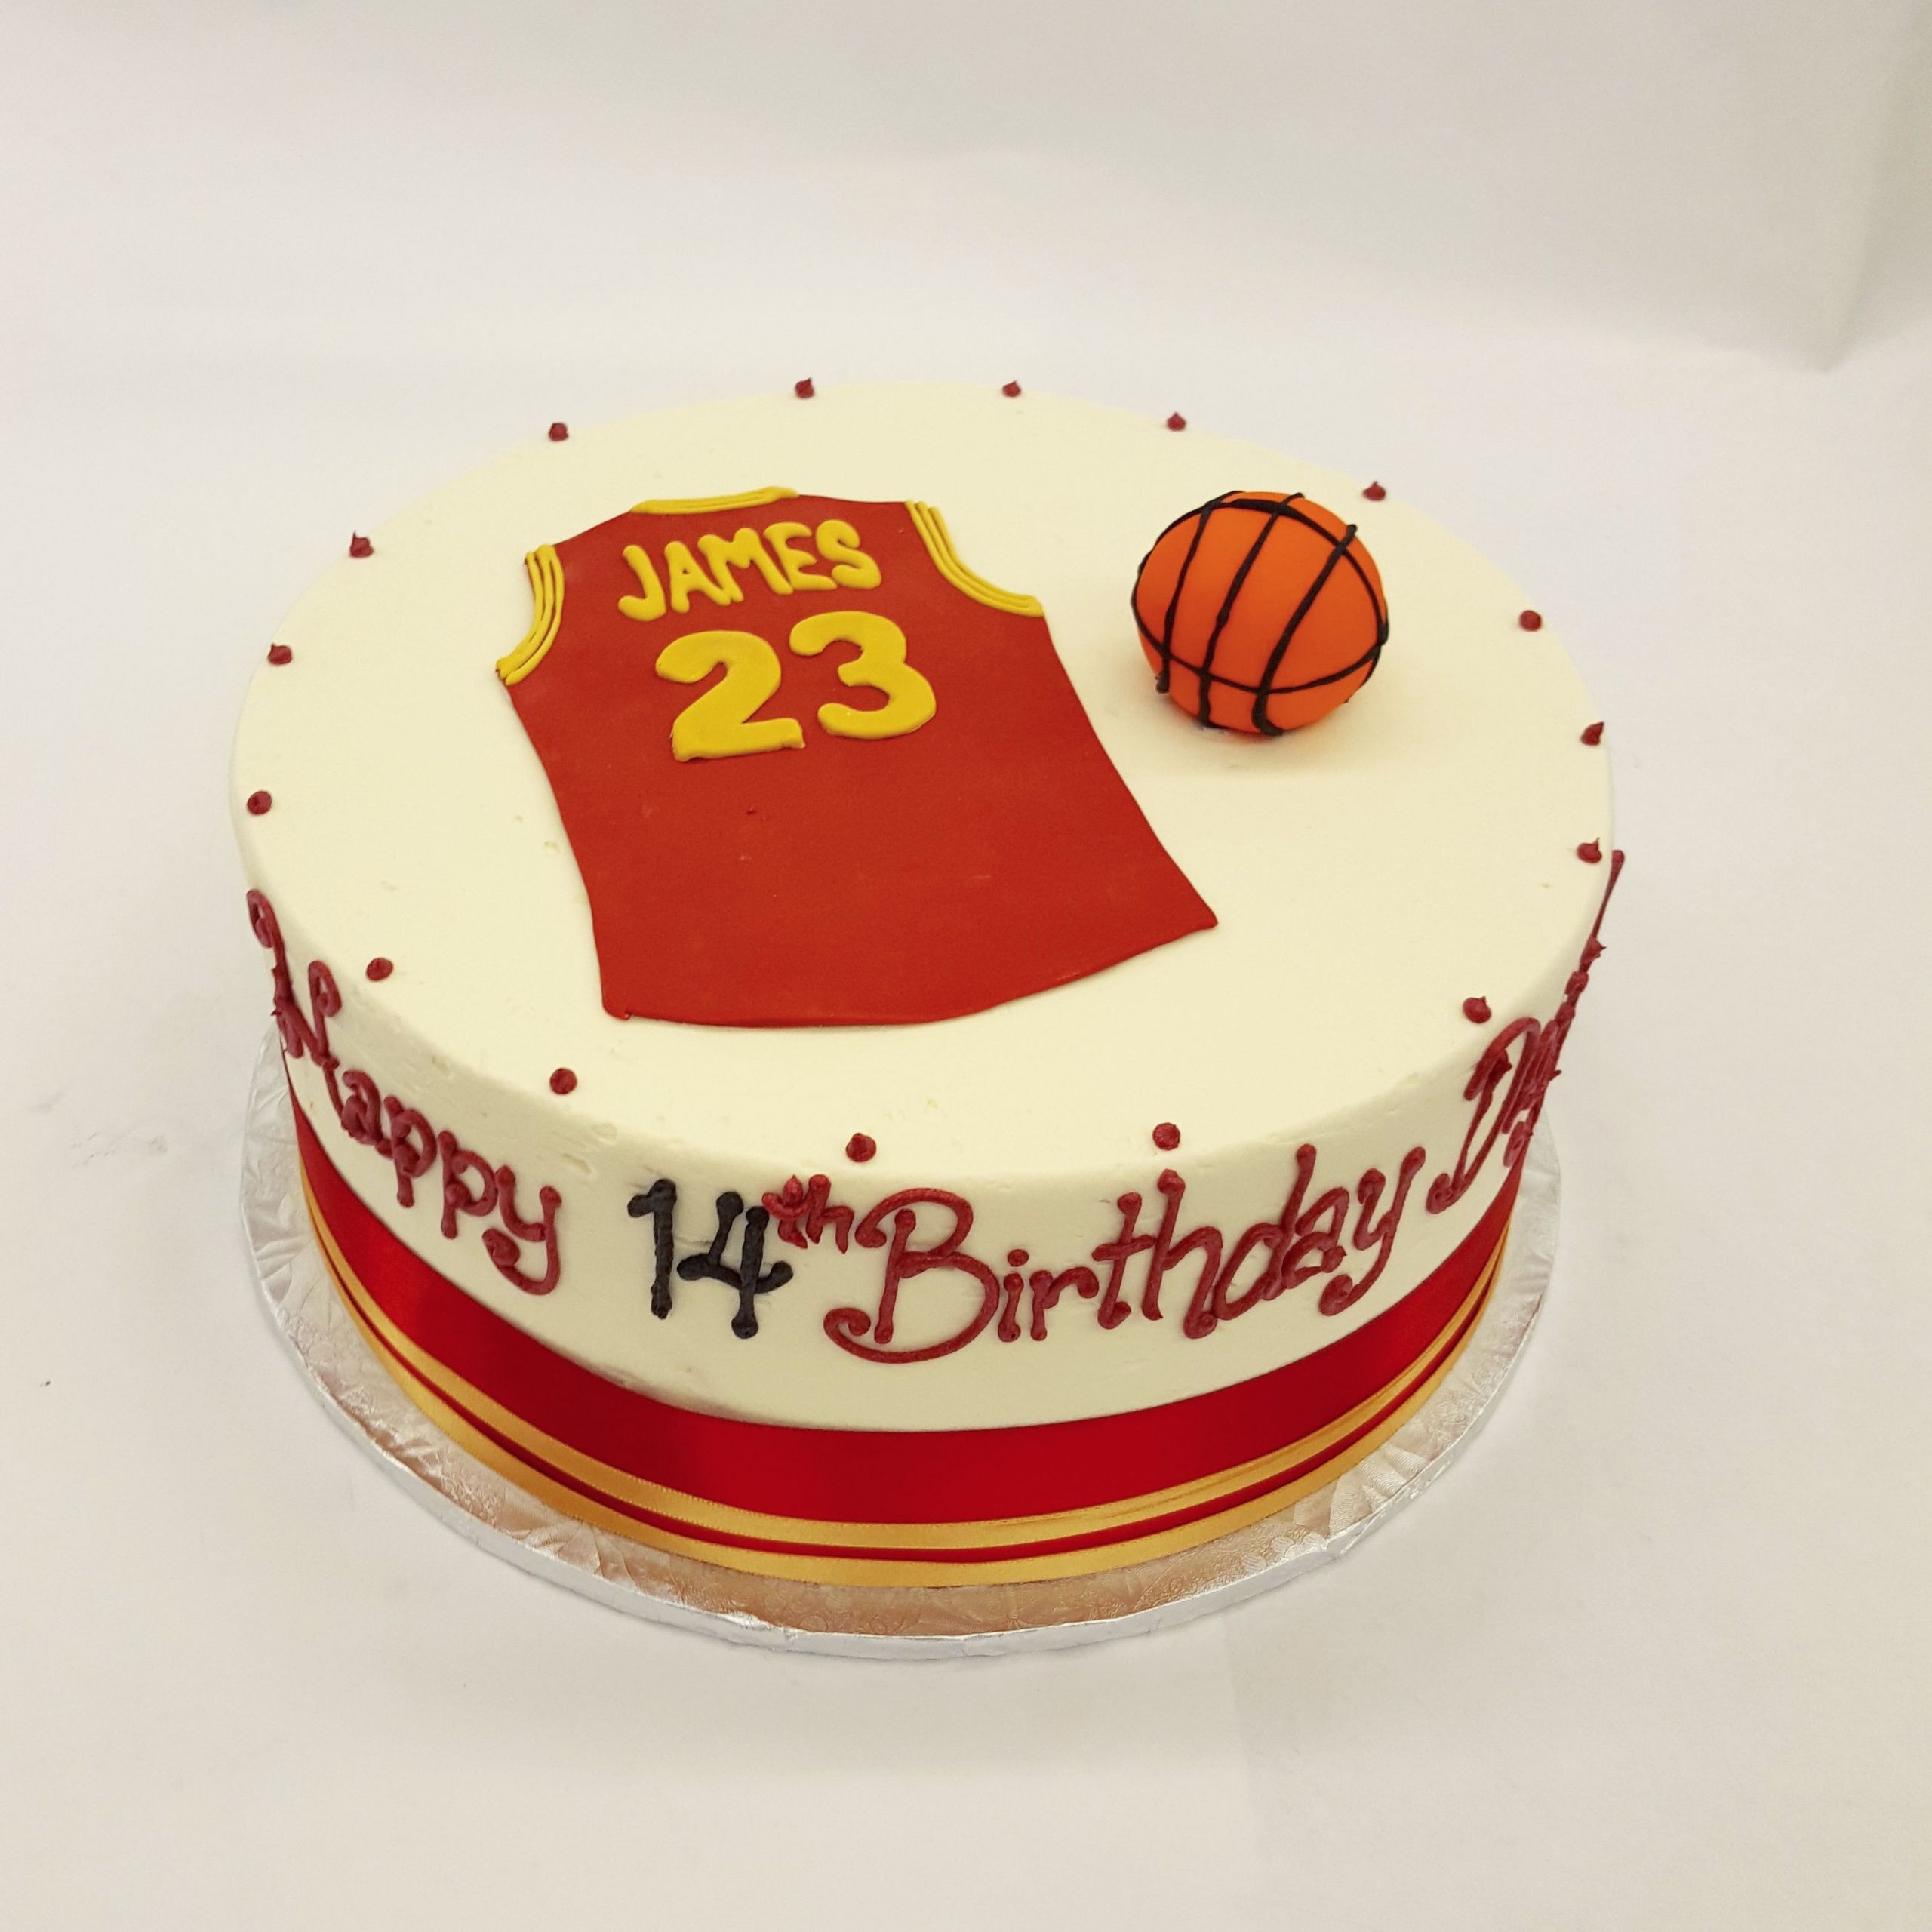 Lebron James Birthday Cake
 LeBron James fan Basketball fan This cake has you